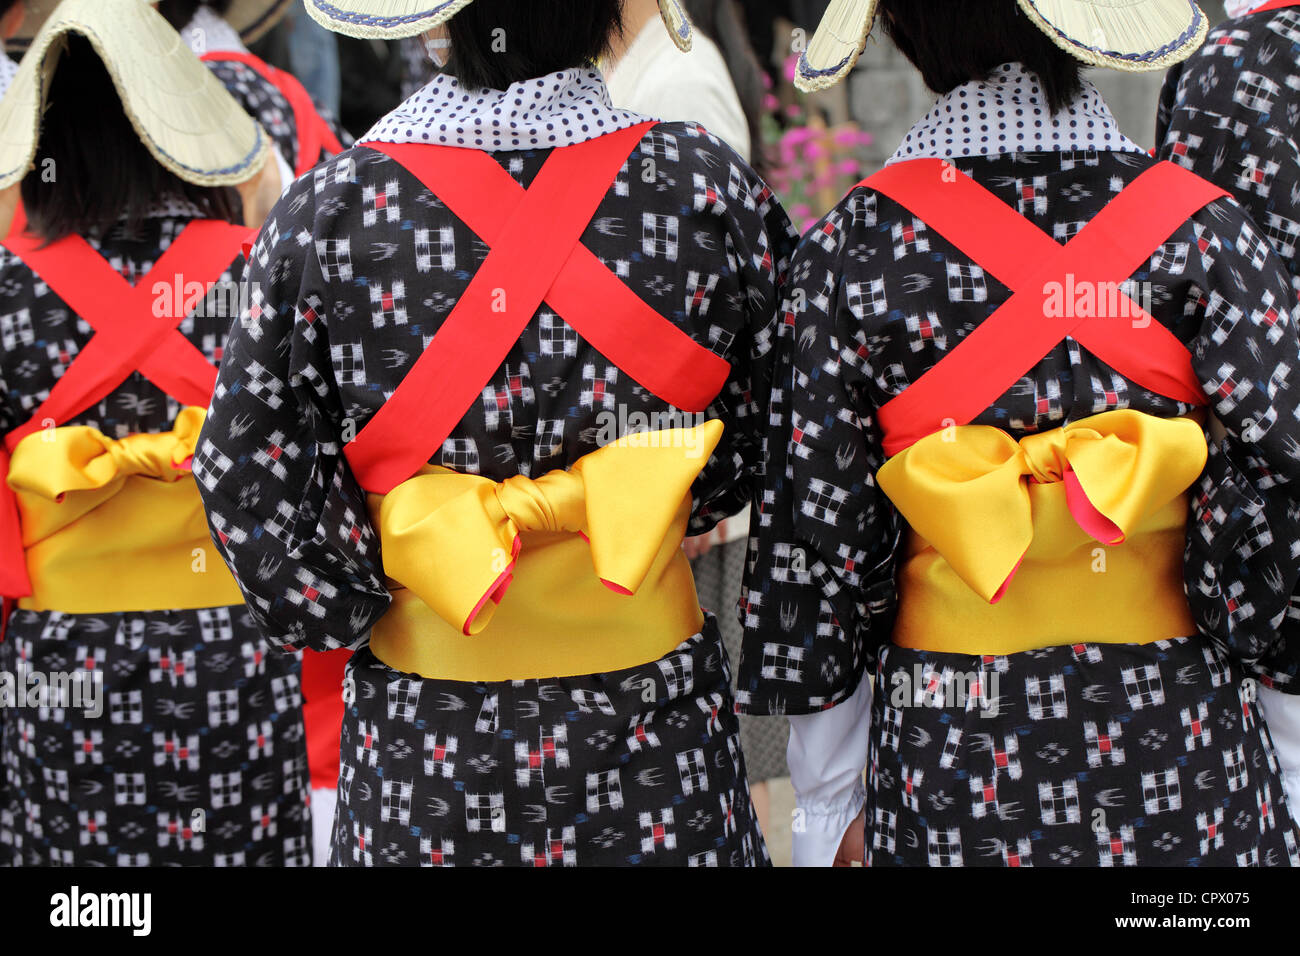 Traditional clothes of kimono, back view Stock Photo